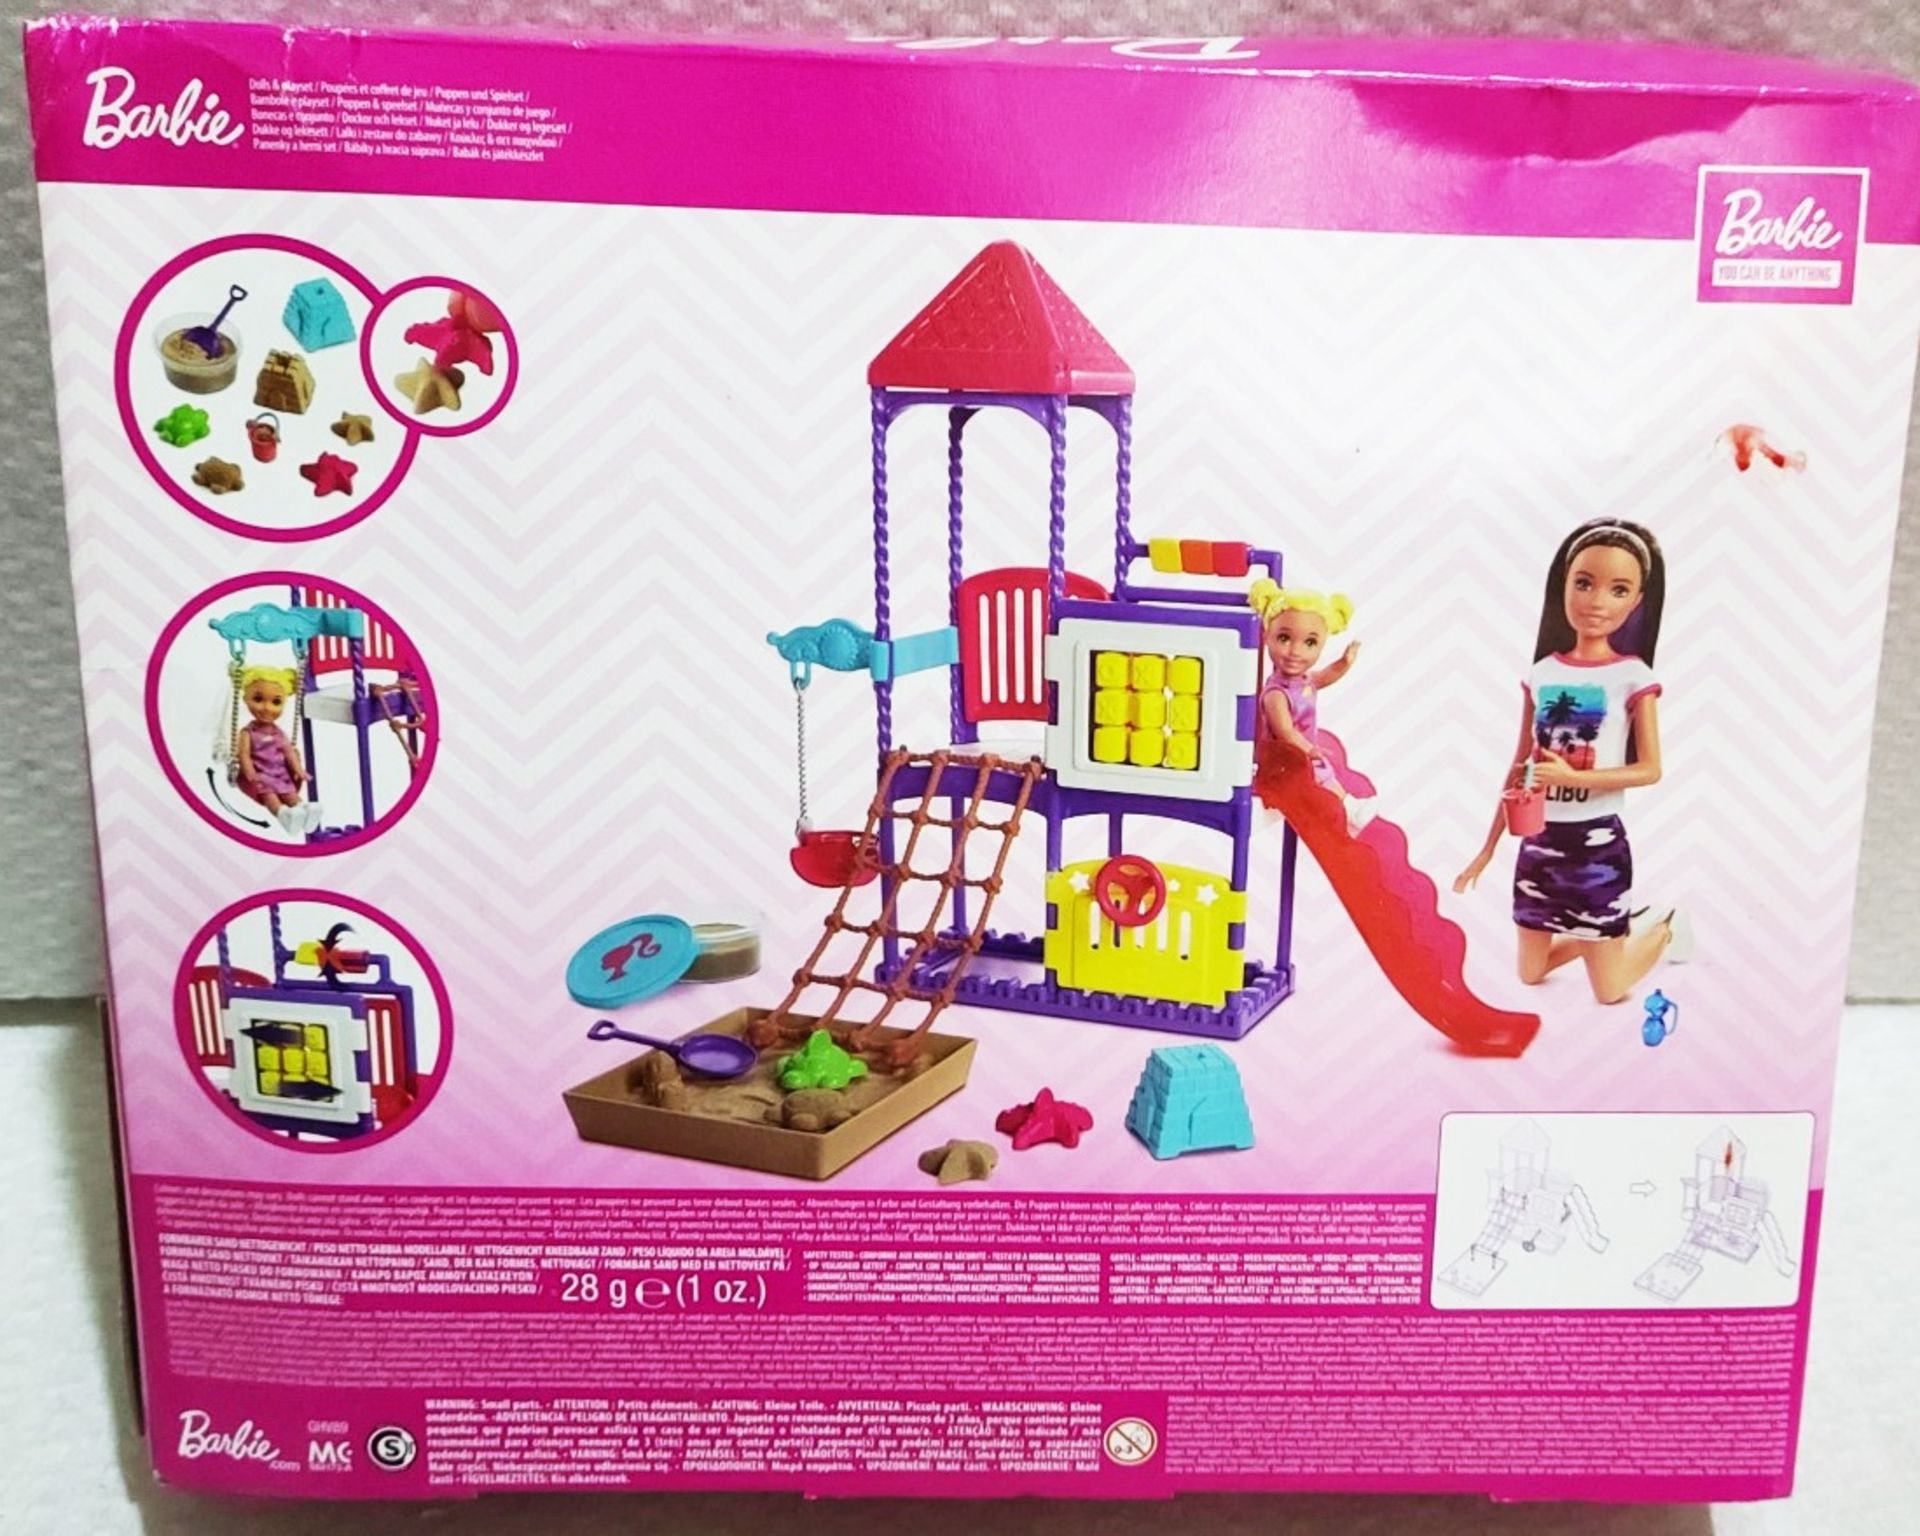 1 x MATTEL Barbie Skipper Babysitters Climb 'N' Explore Play Set - Image 2 of 3